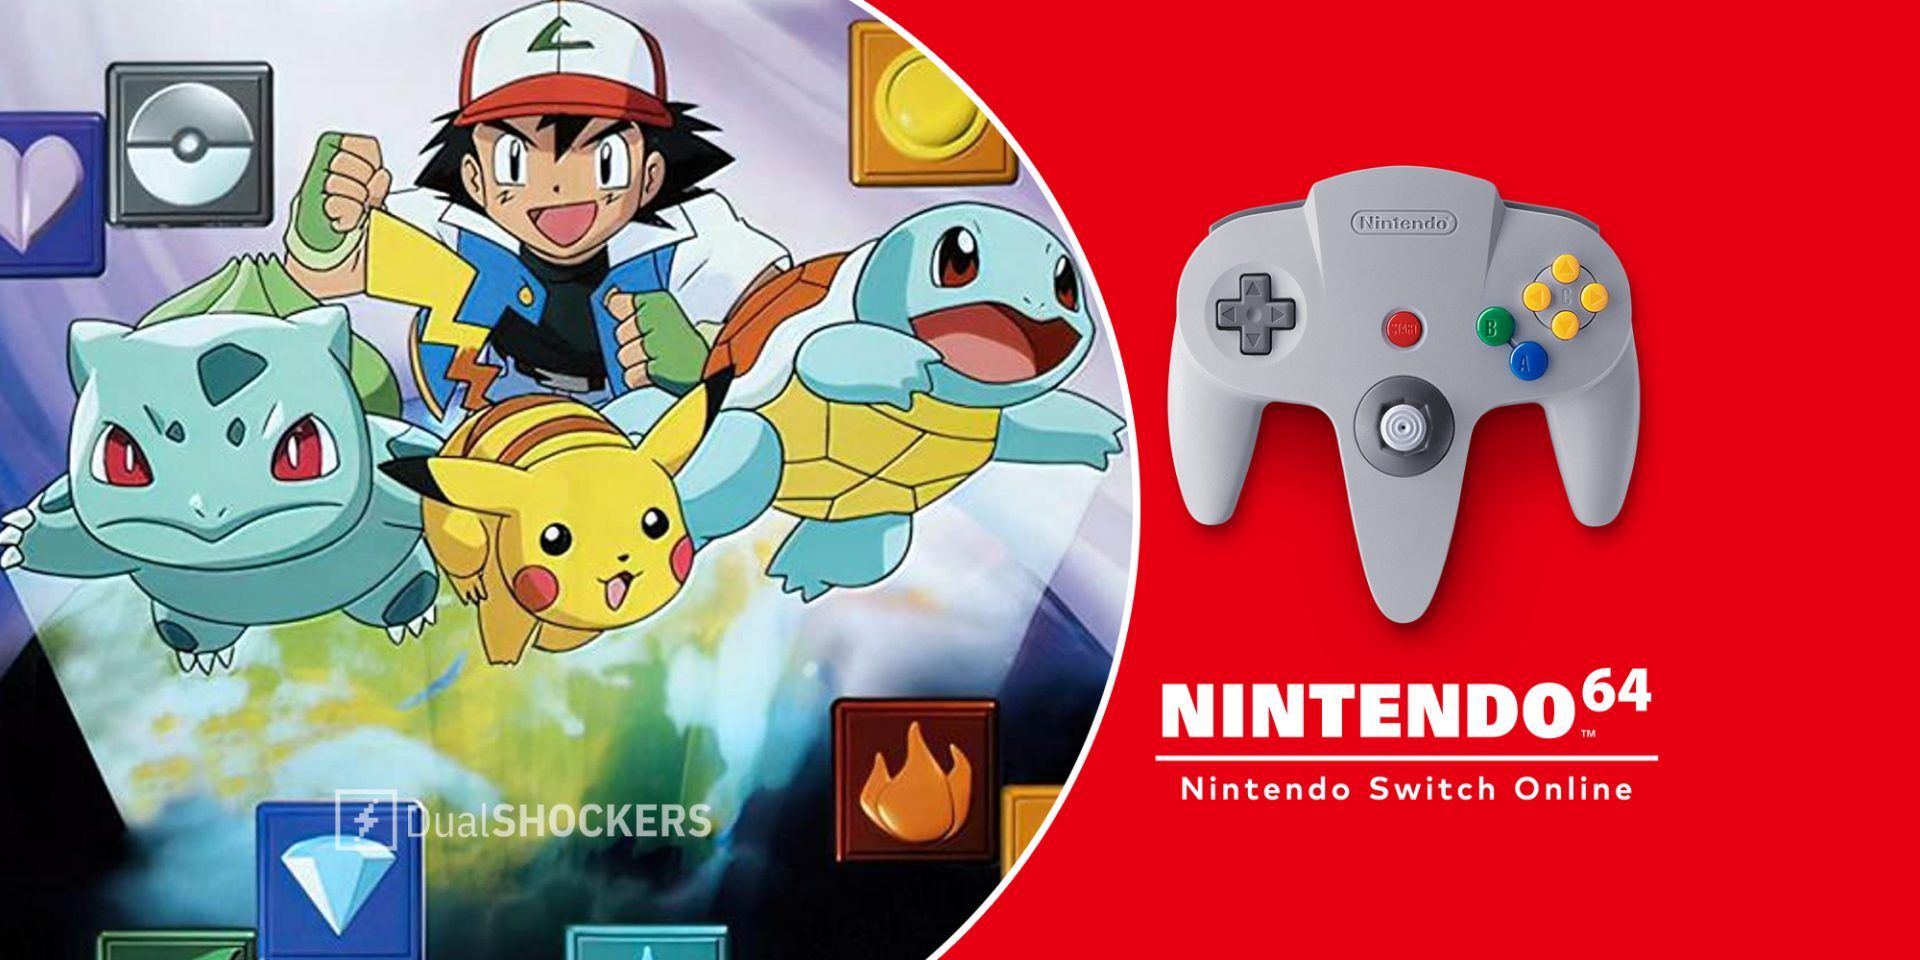 Nintendo Switch Online + Expansion Pack: Pokémon Puzzle League is now  available! - News - Nintendo Official Site